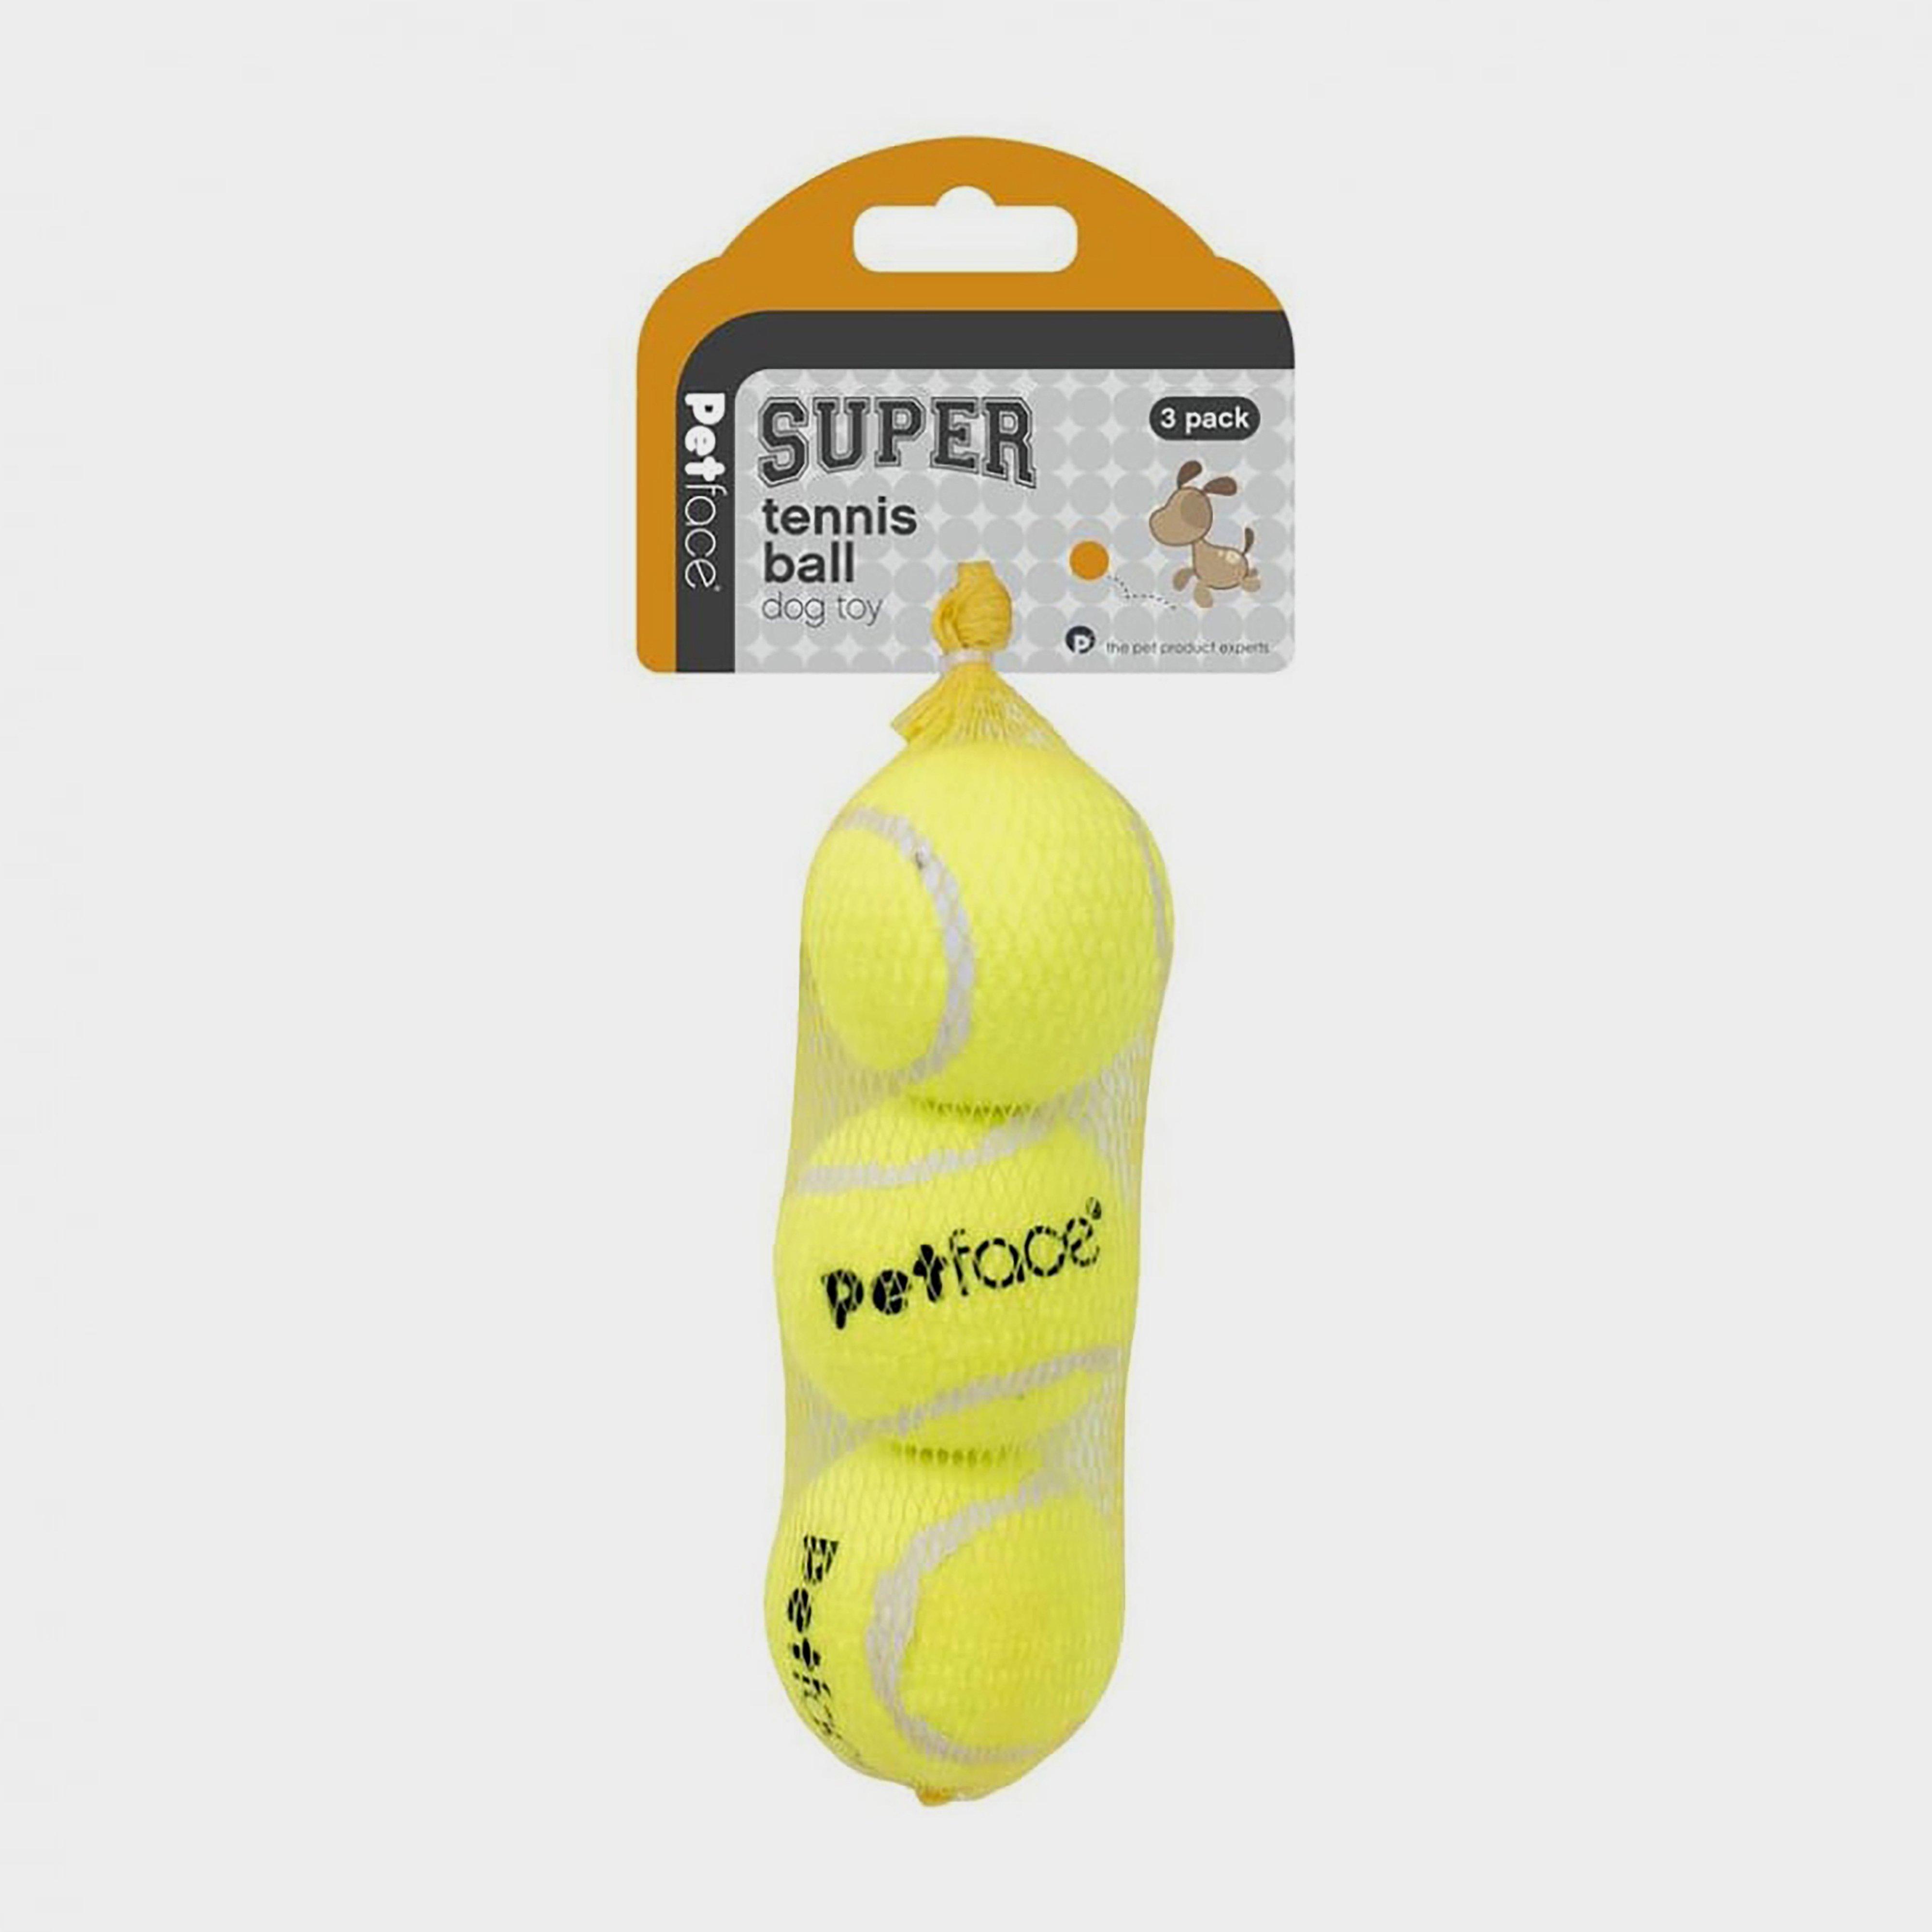 Photos - Dog Toy Petface Super Tennis Balls - 3 Pack, Yellow